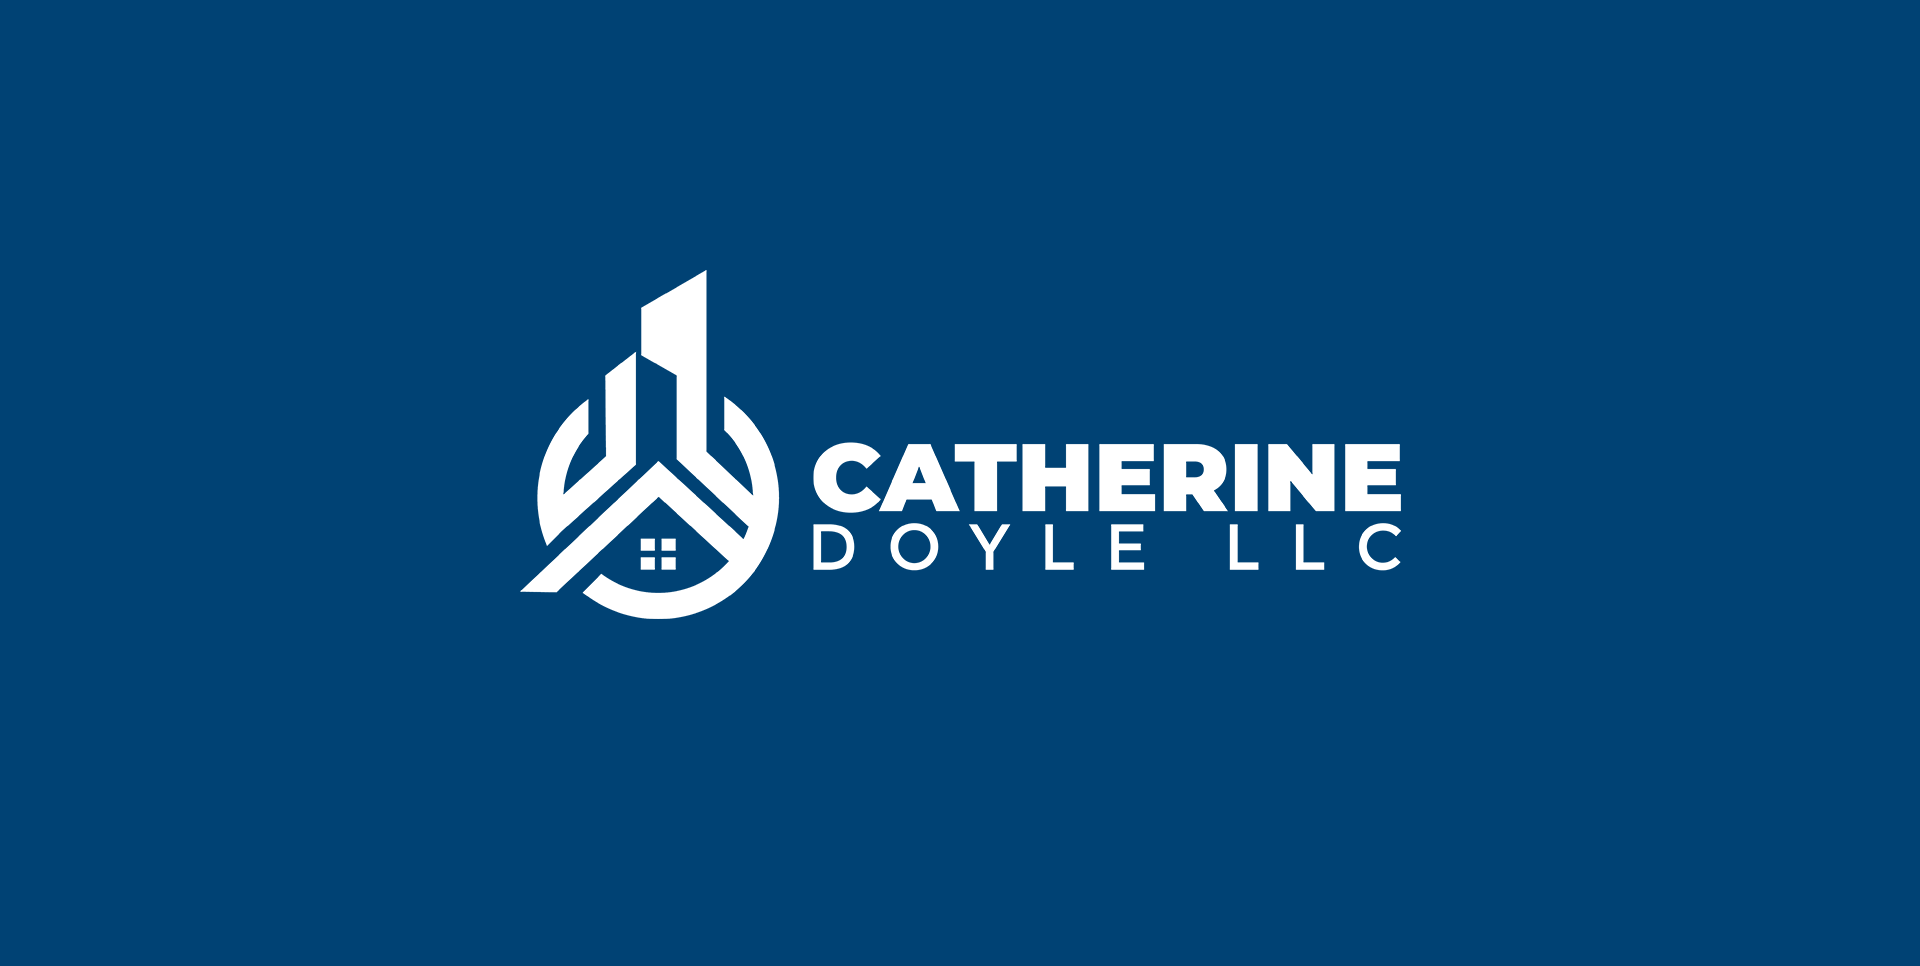 Catherine-Doyle-LLC_